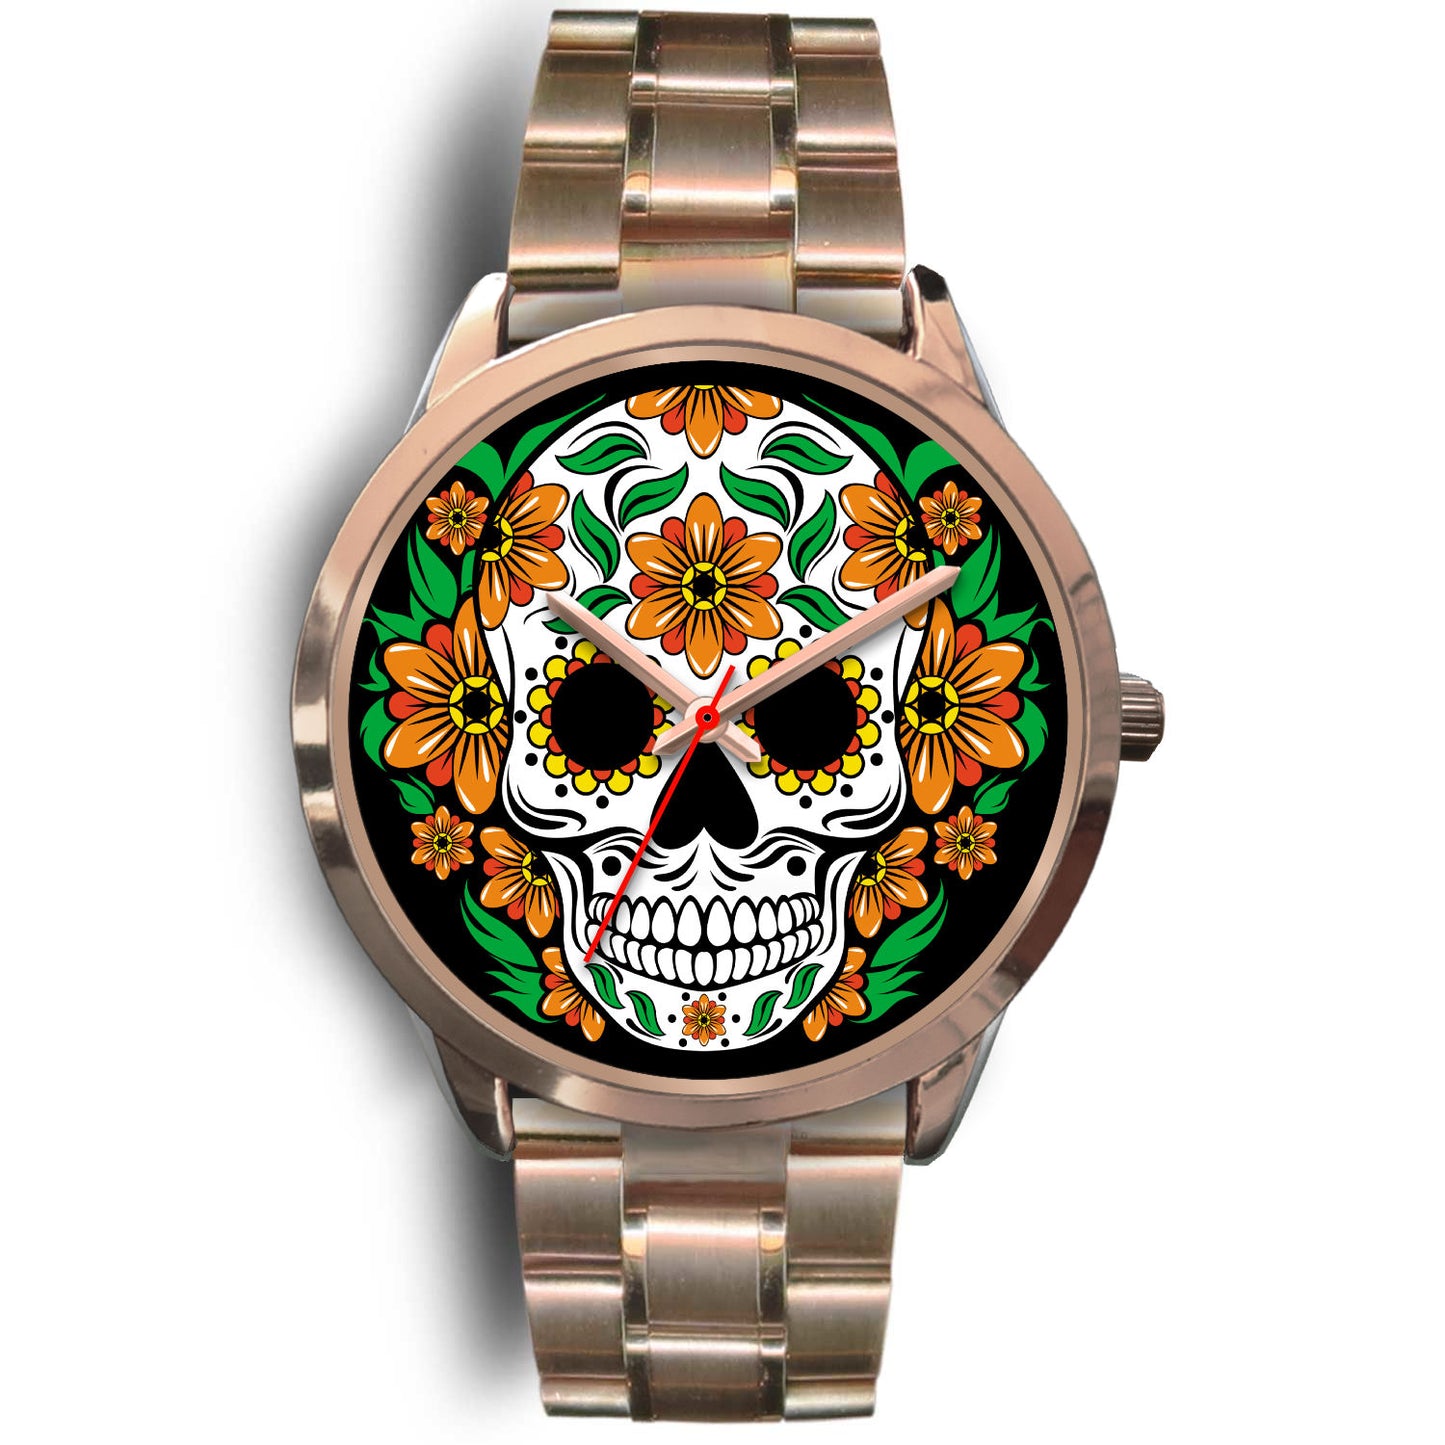 Sugar skull watch